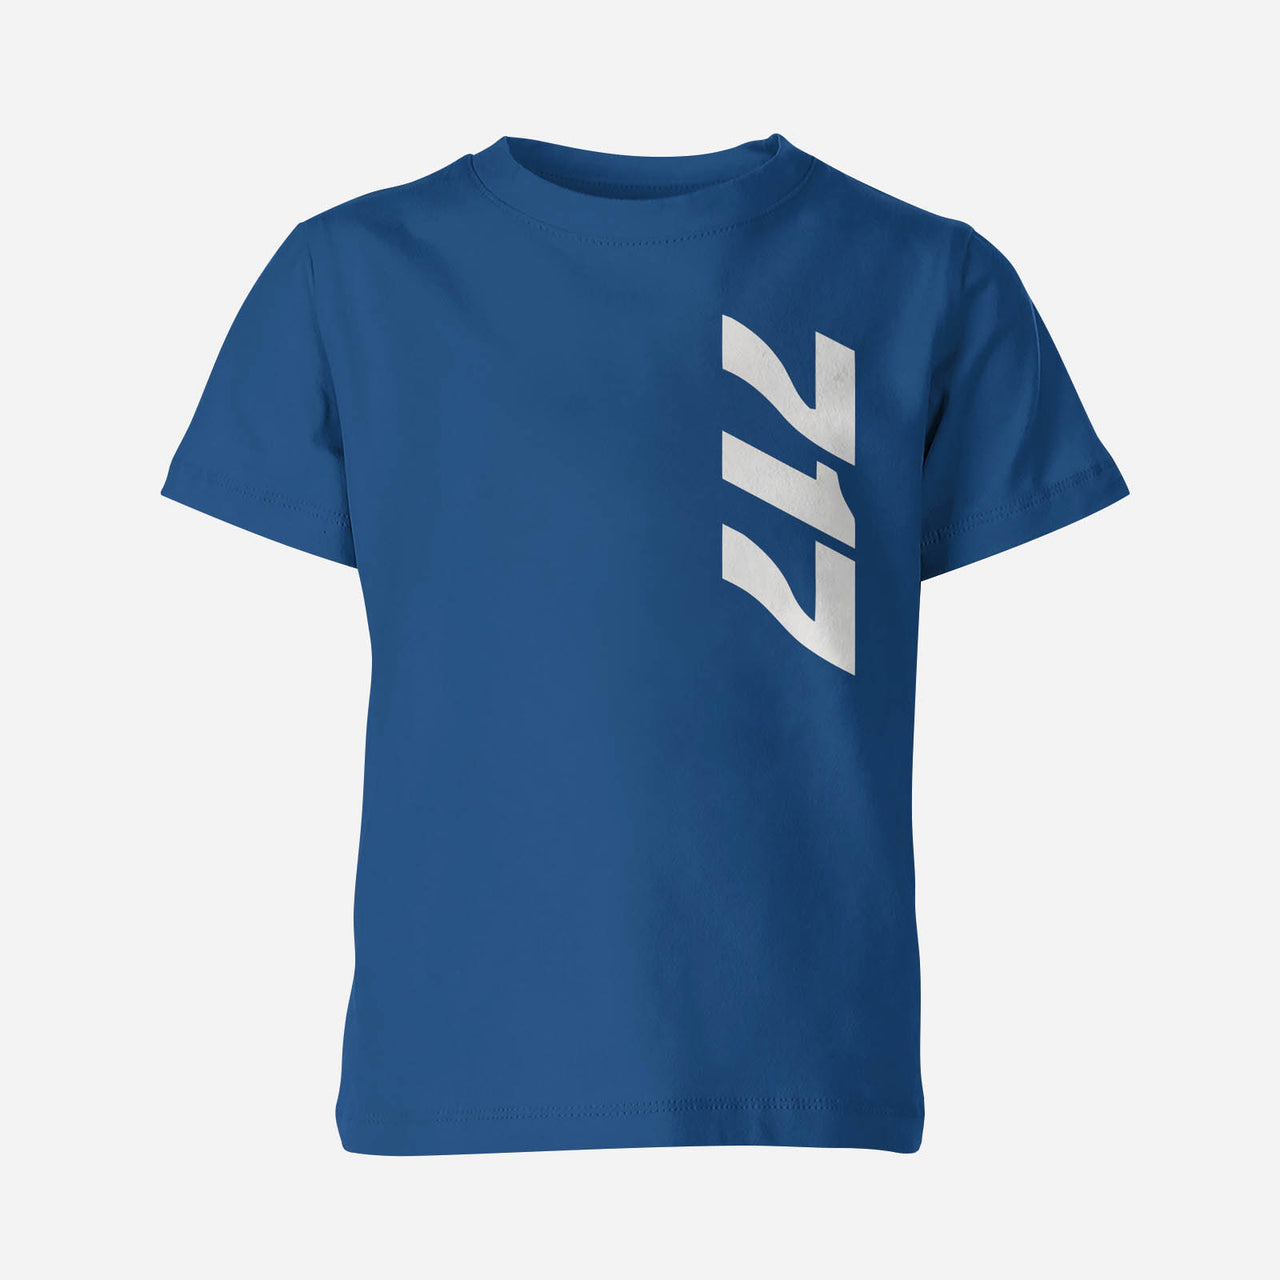 717 Side Text Designed Children T-Shirts